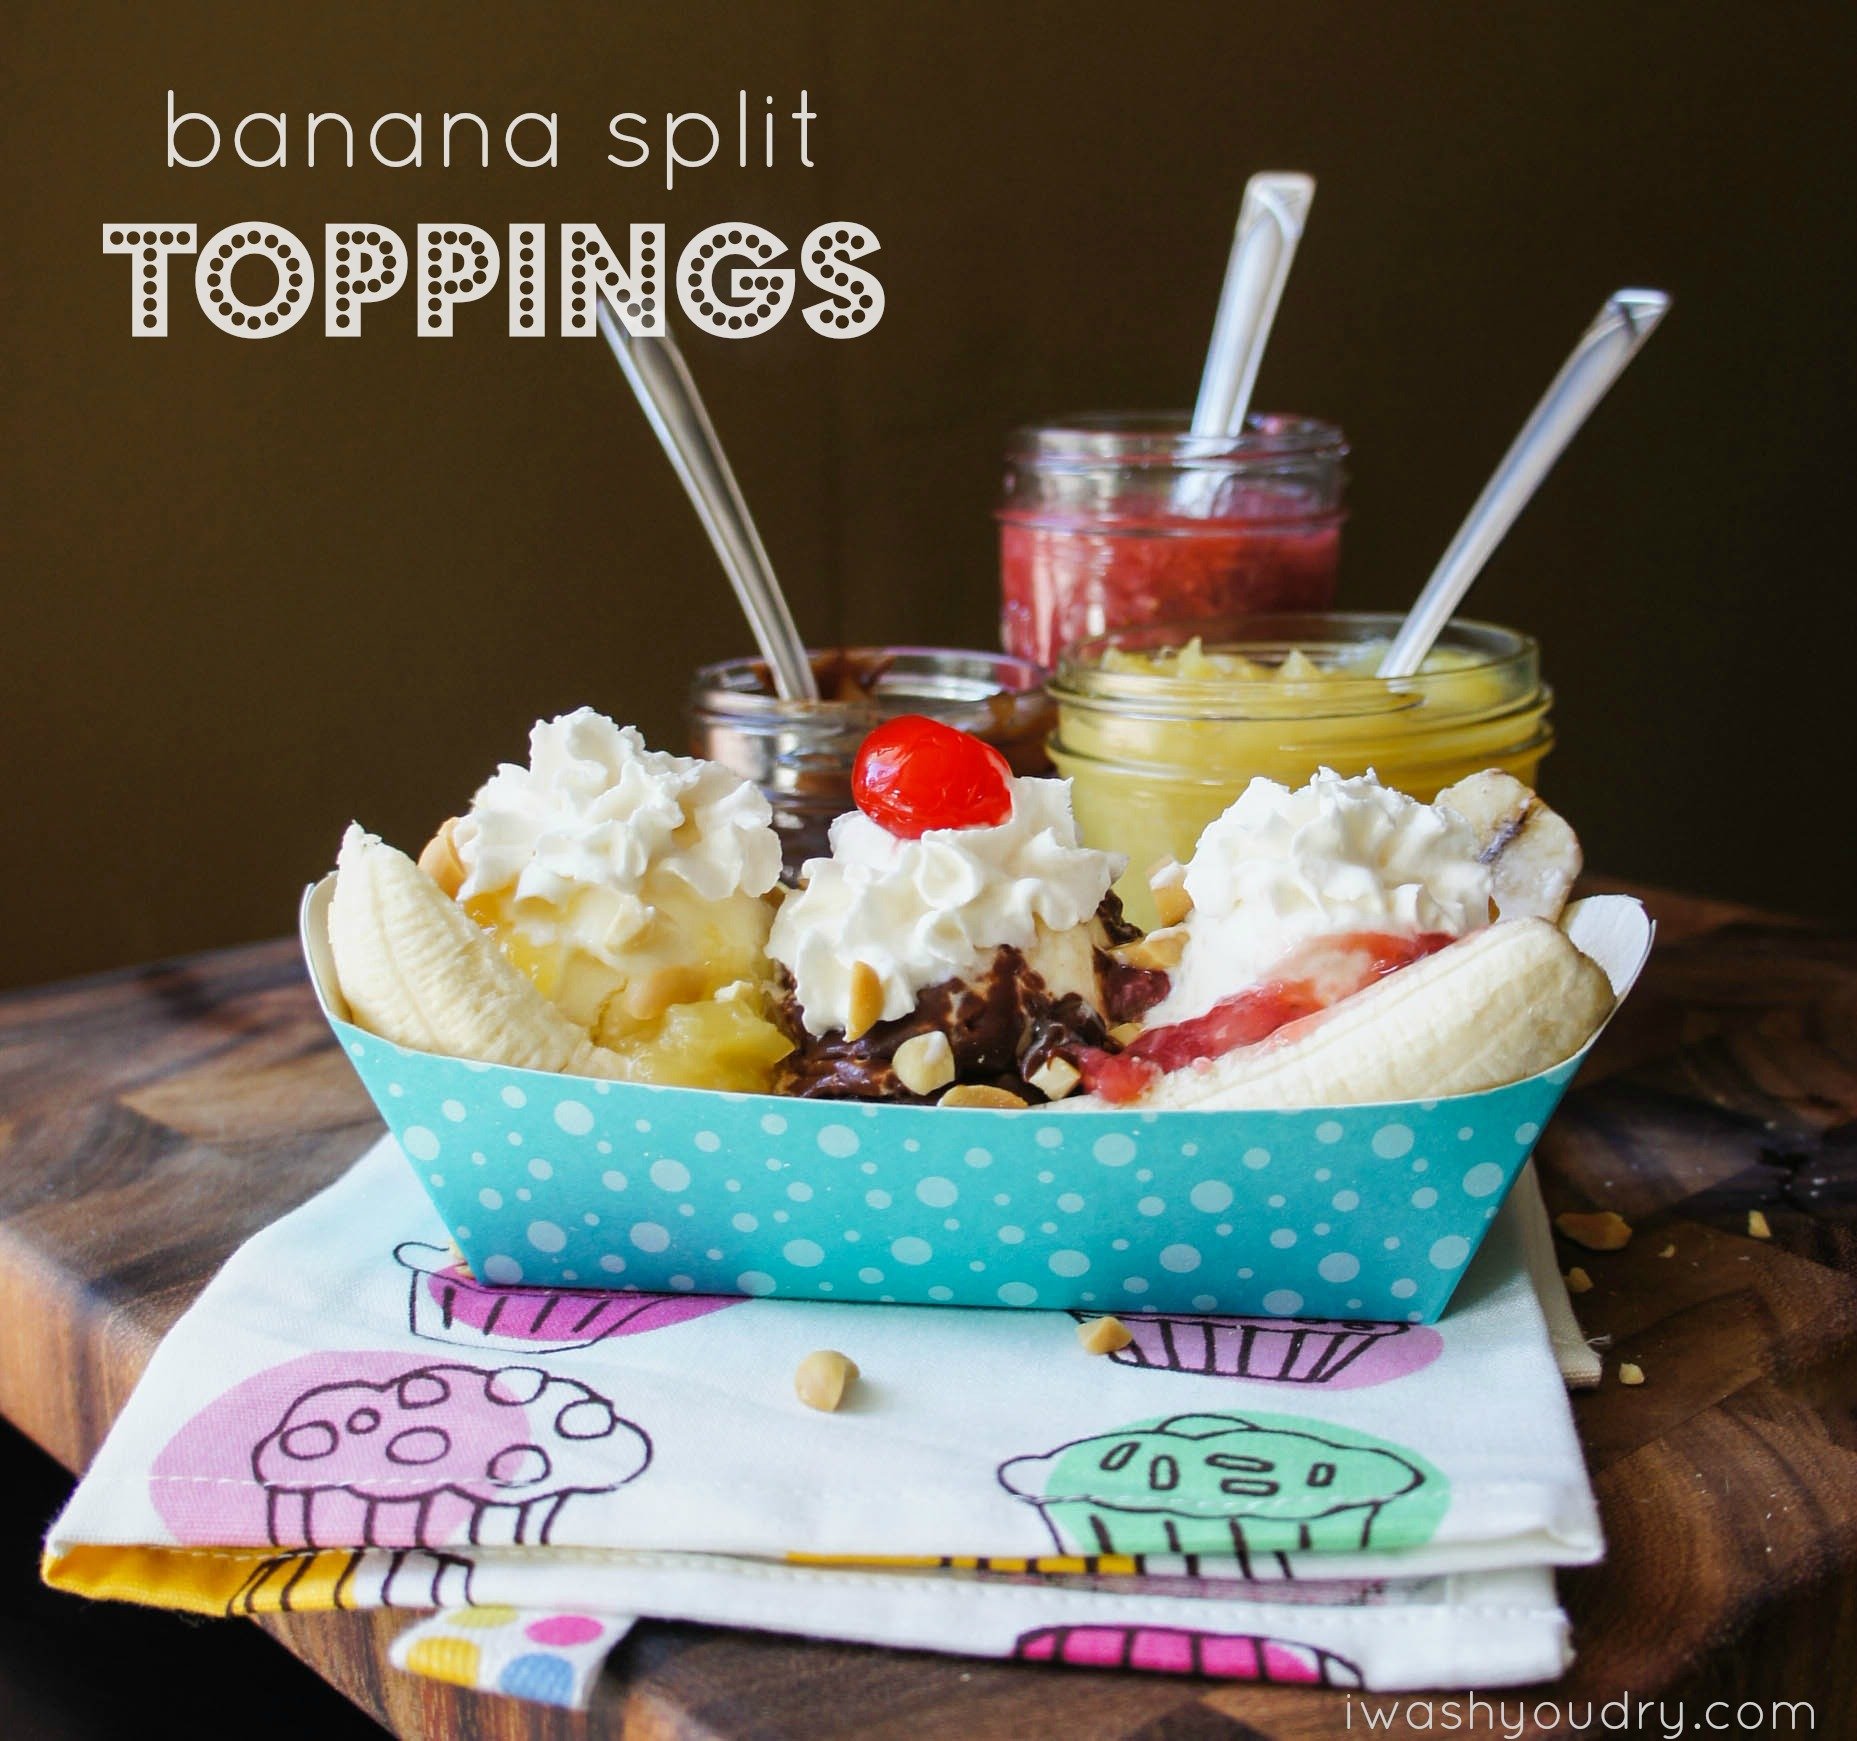 Best Banana Split Recipe - How to Make A Classic Banana Split